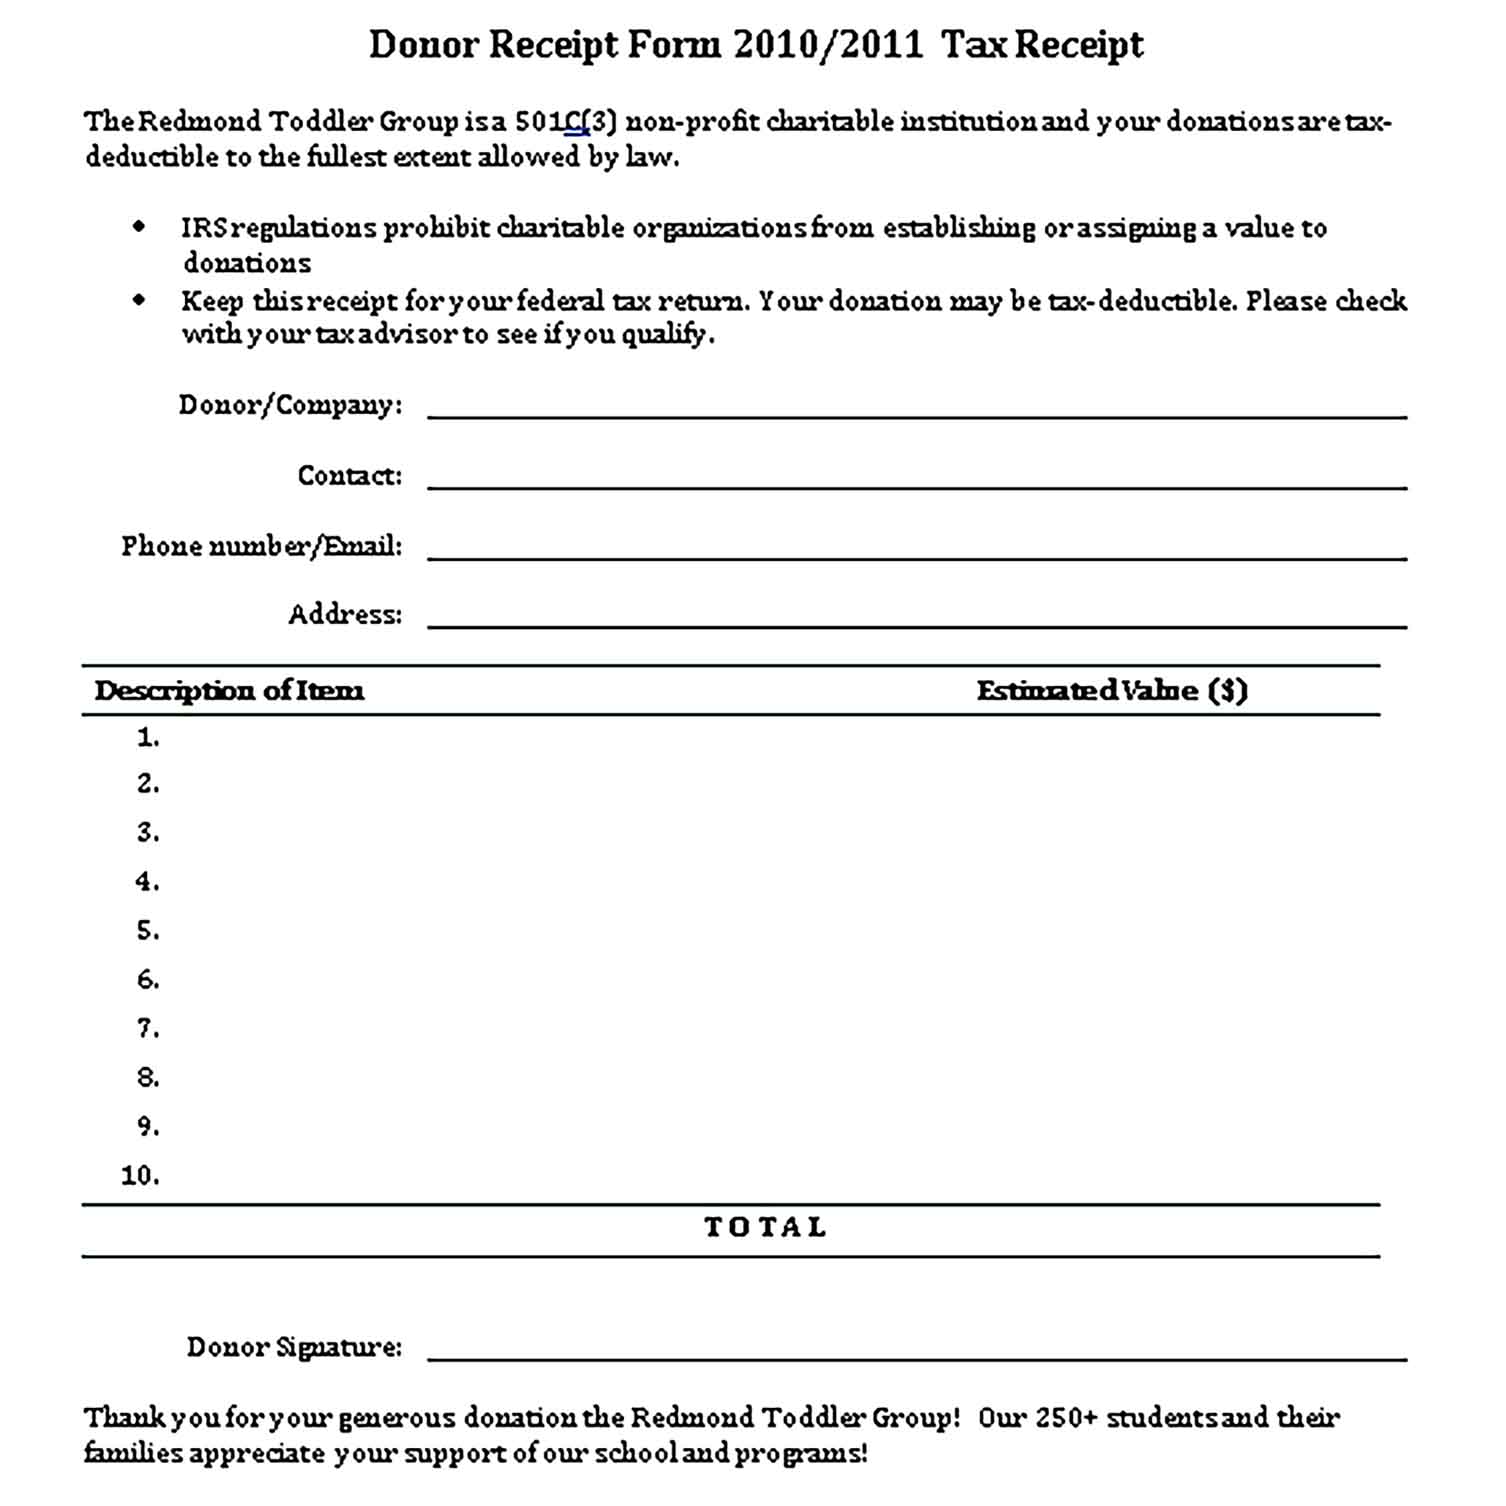 Sample Printable Donor Receipt Form Templates